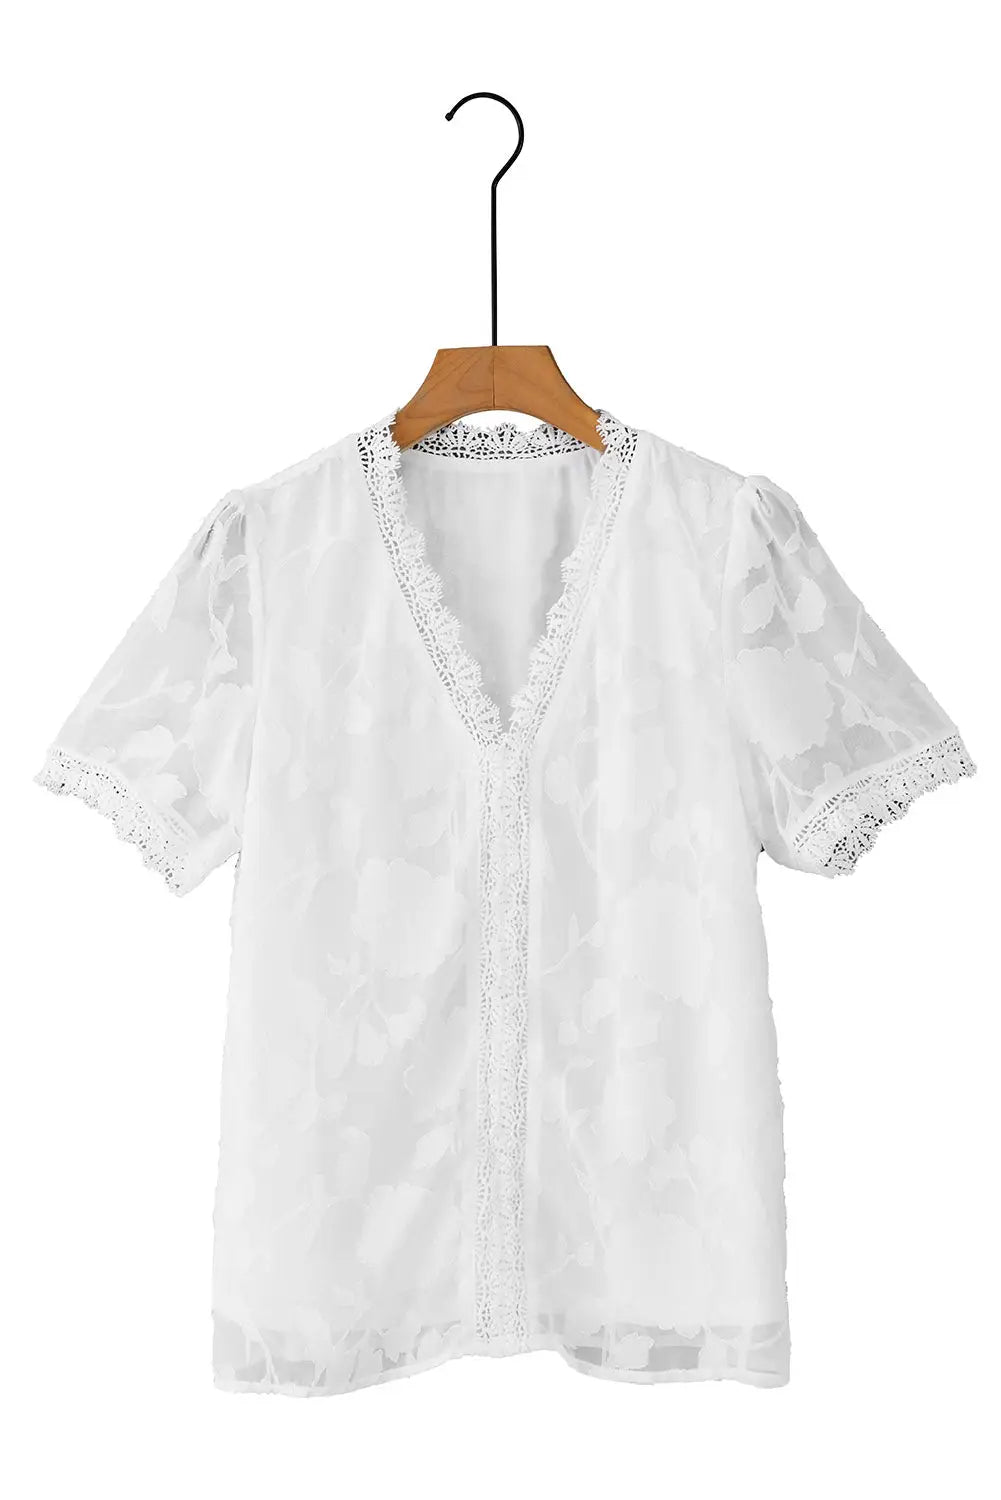 White jacquard lace crochet contrast v neck t shirt - tops